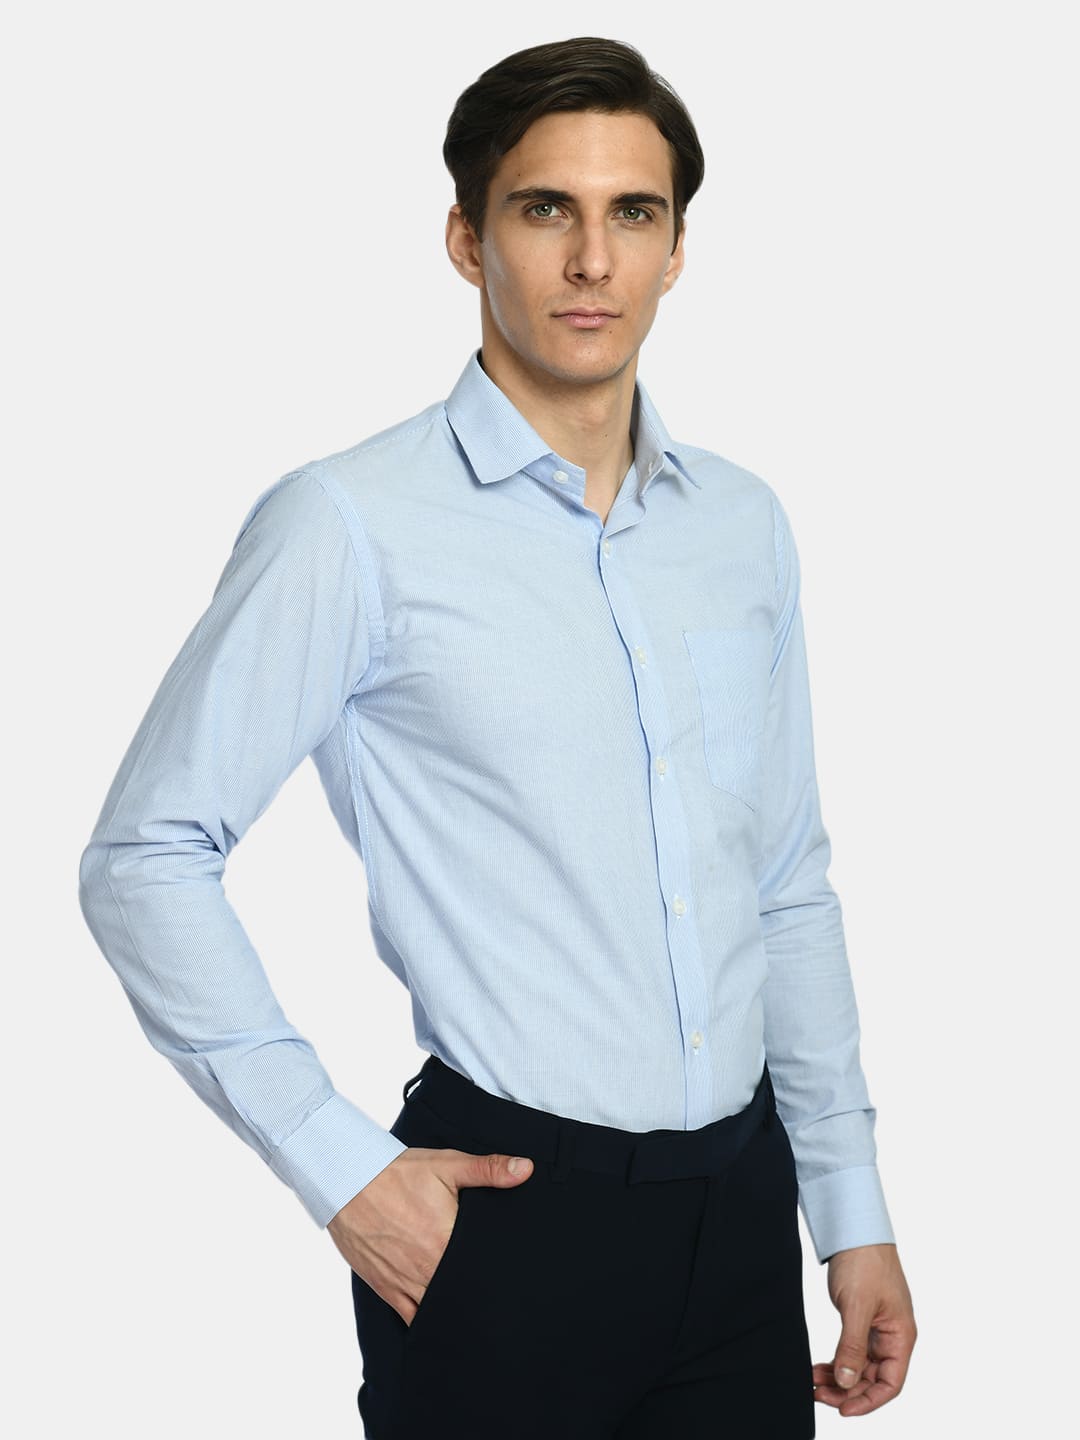 Men's Sky blue Stripes Cotton Formal Shirt